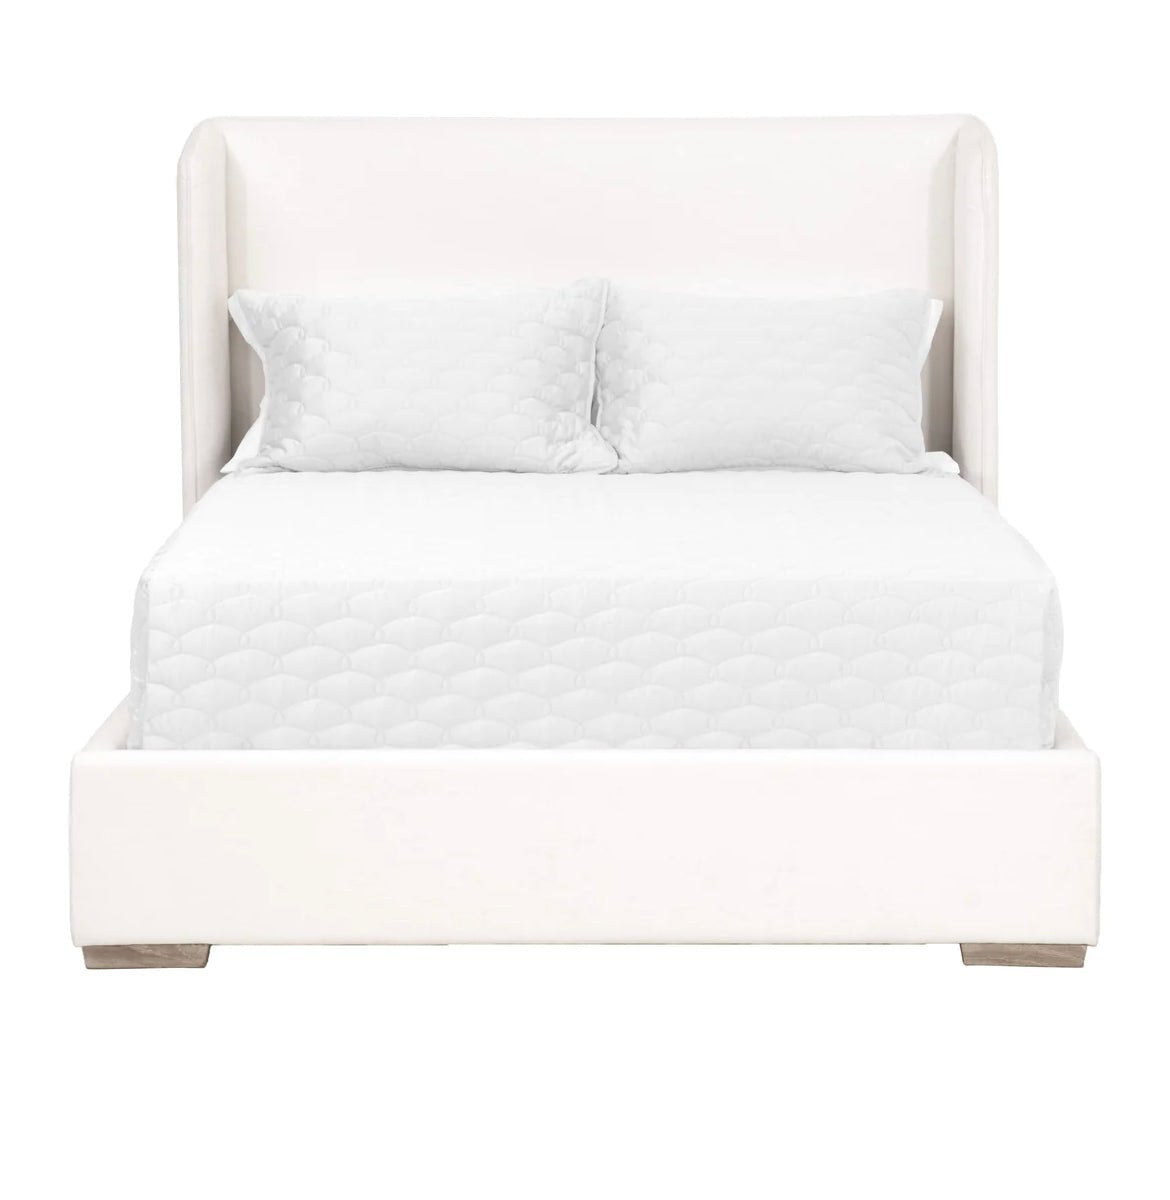 ‘Stewart’ Bed (Standard King) - EcoLuxe Furnishings